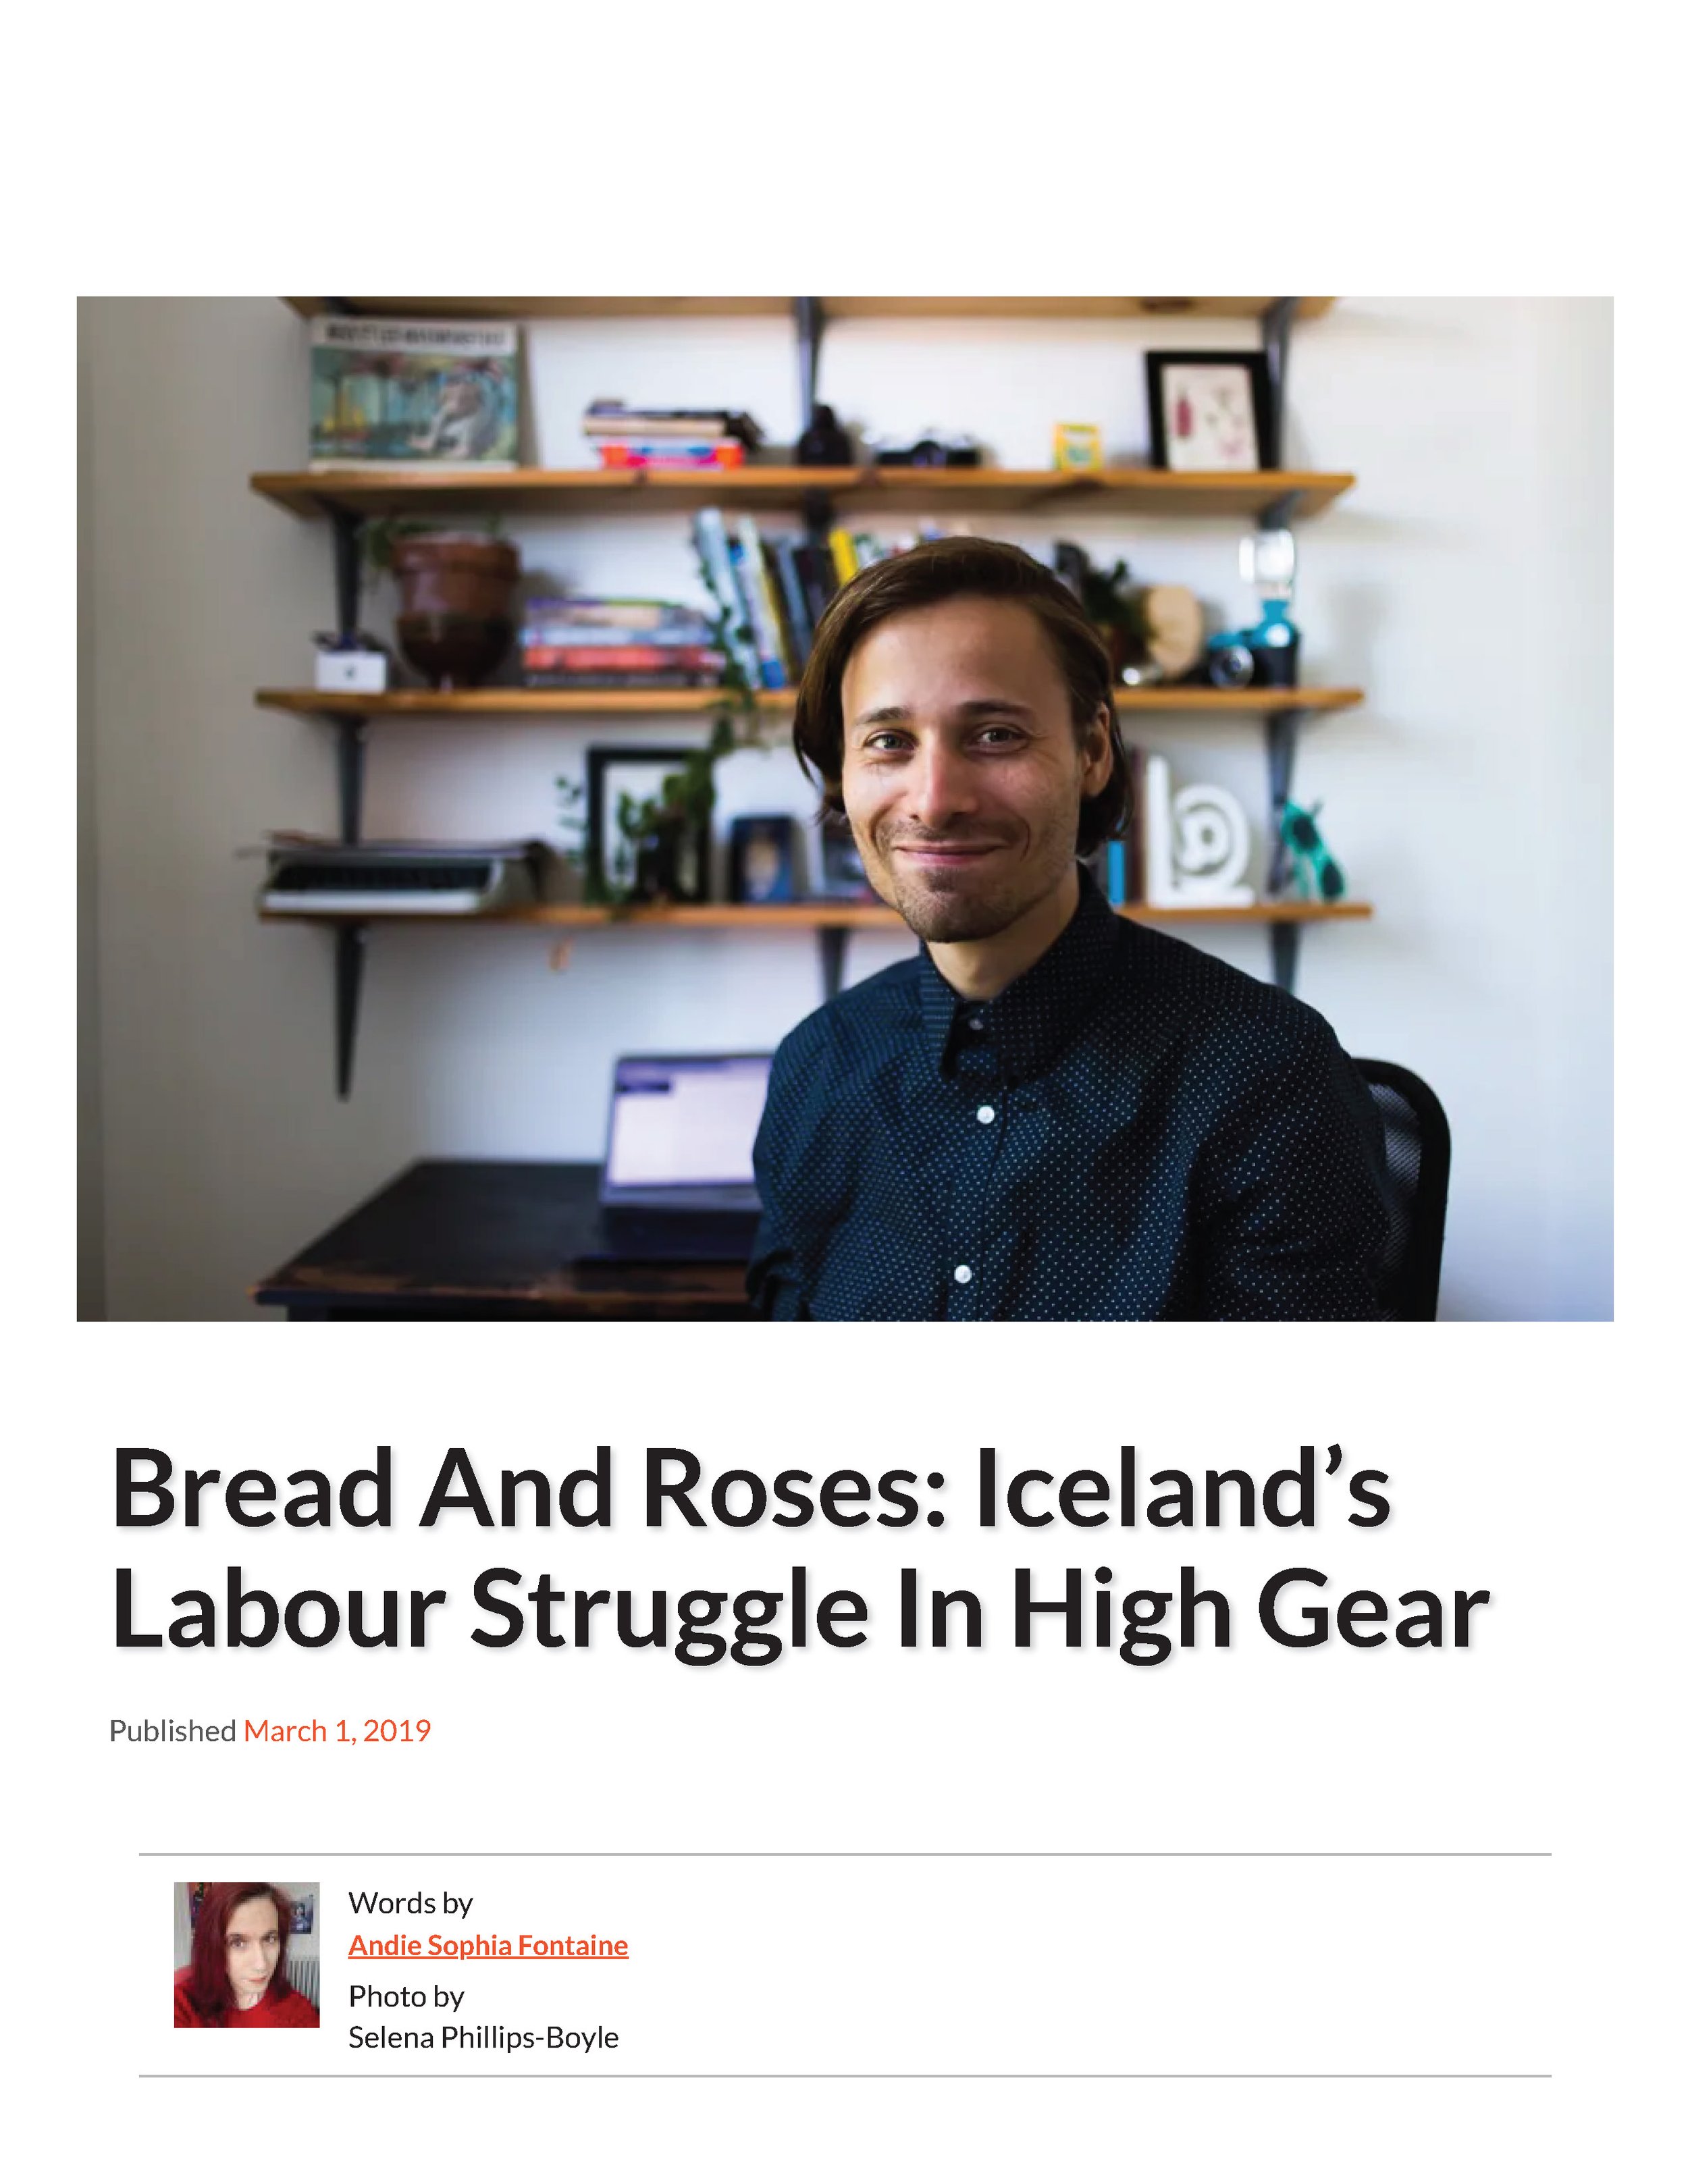 Iceland's Labour Struggle